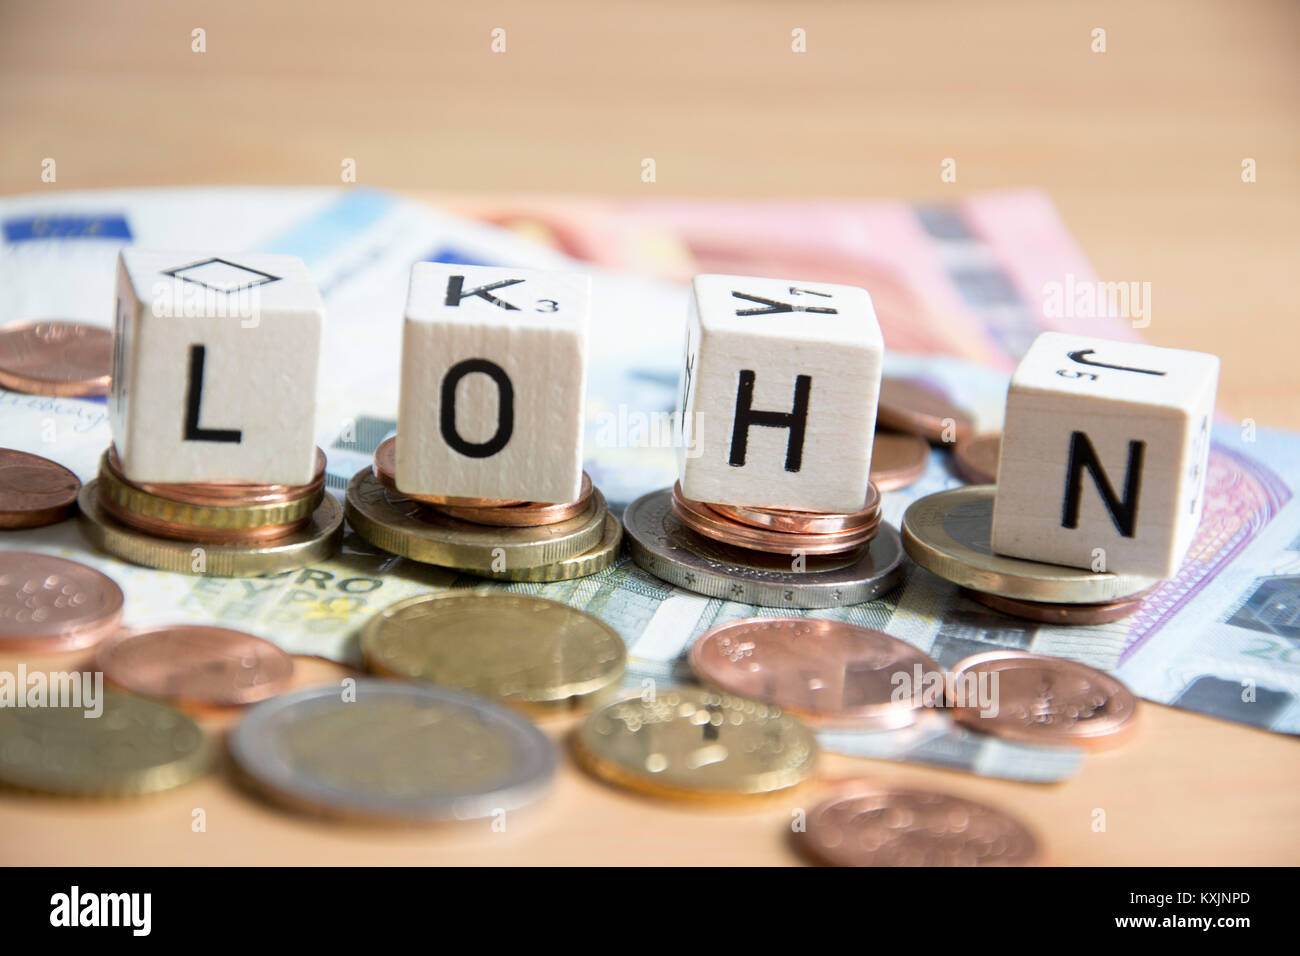 Lohn ( german for salary ) word written on wood cube Stock Photo